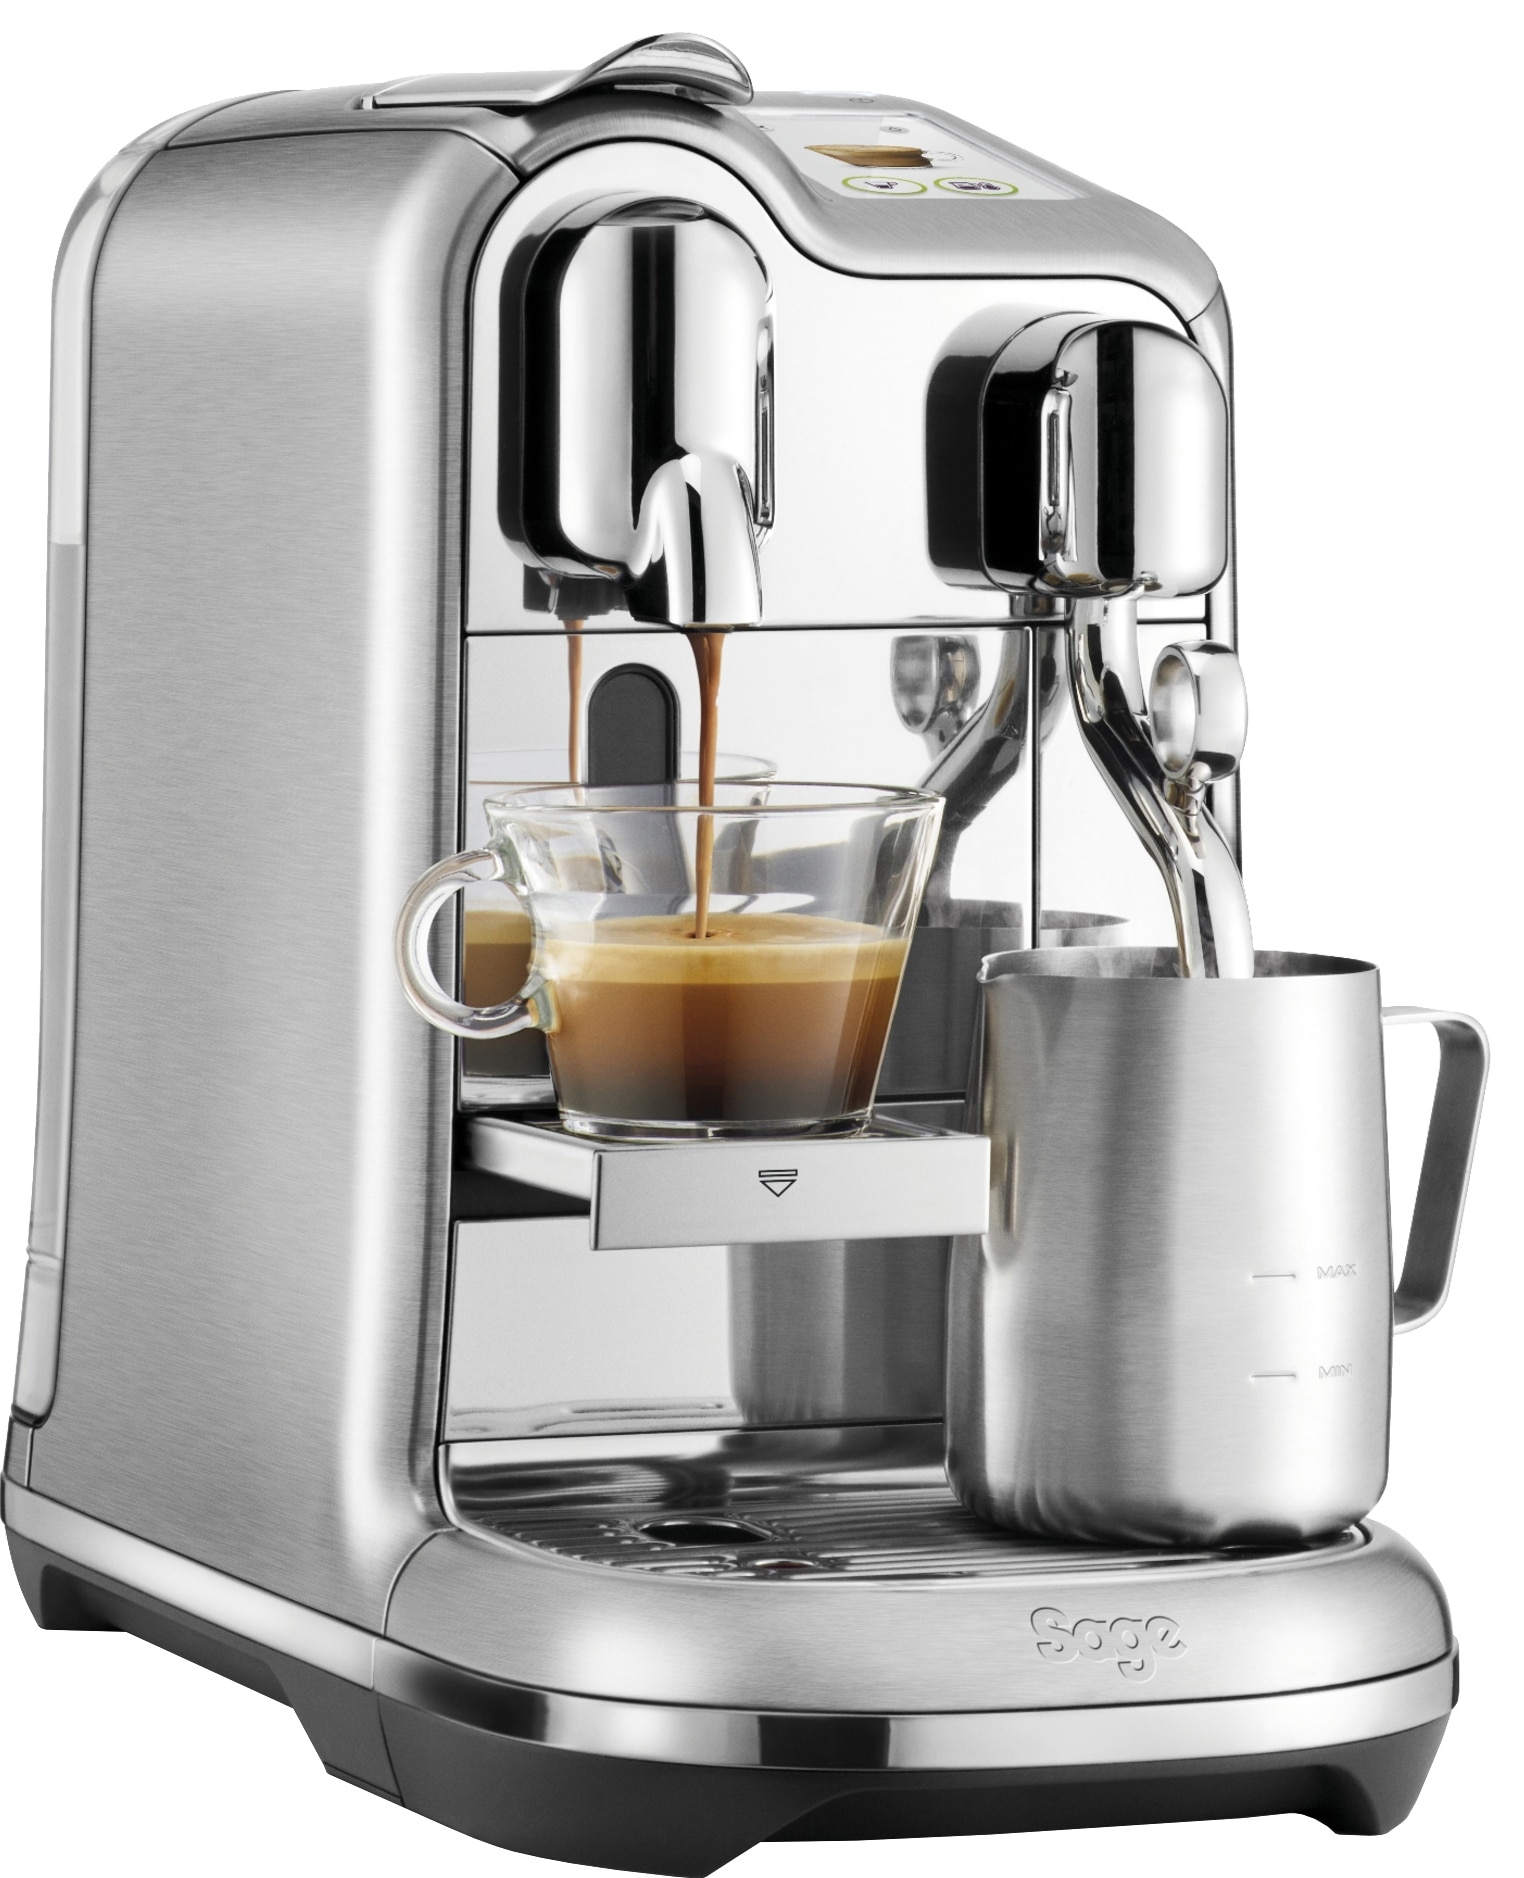 Nespresso fra Sage Creatista Pro kapselkaffemaskine SNE900BSS4END1